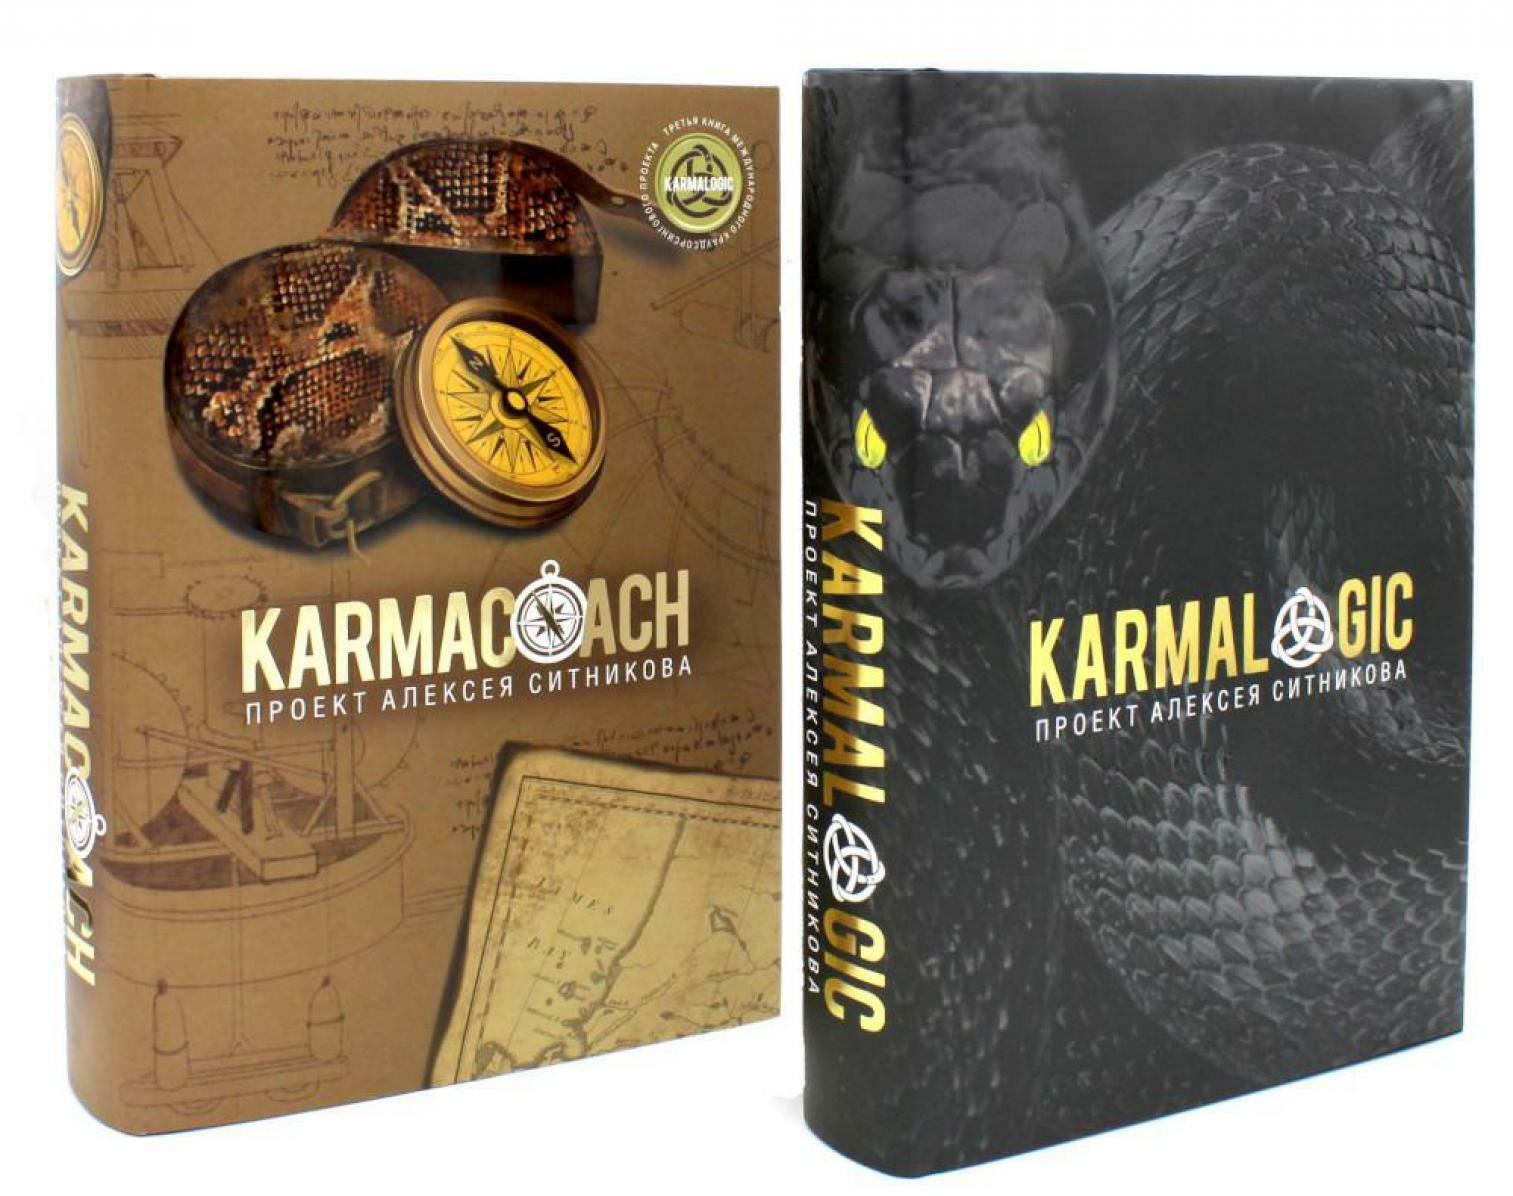 KARMALOGIC+KARMACOACH - Проект Ситникова. В 2-х томах (комплект из 2-х книг)